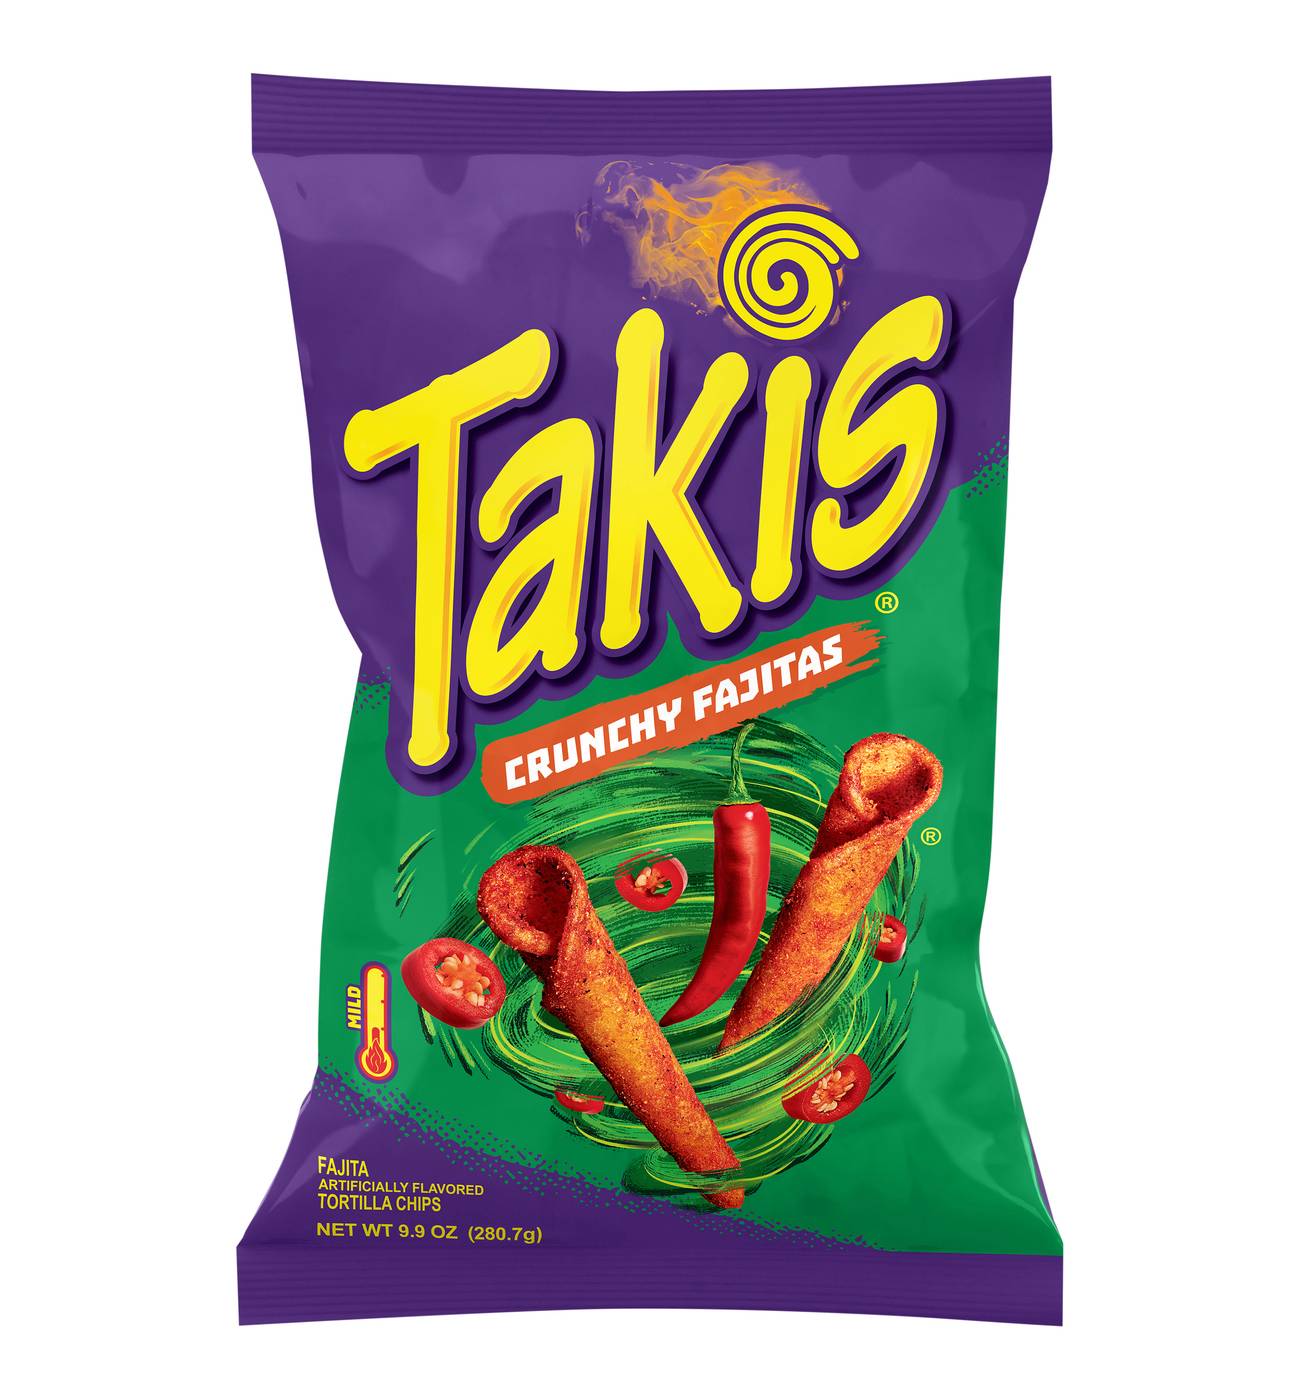 Takis Crunchy Fajitas Rolled Tortilla Chips; image 1 of 7